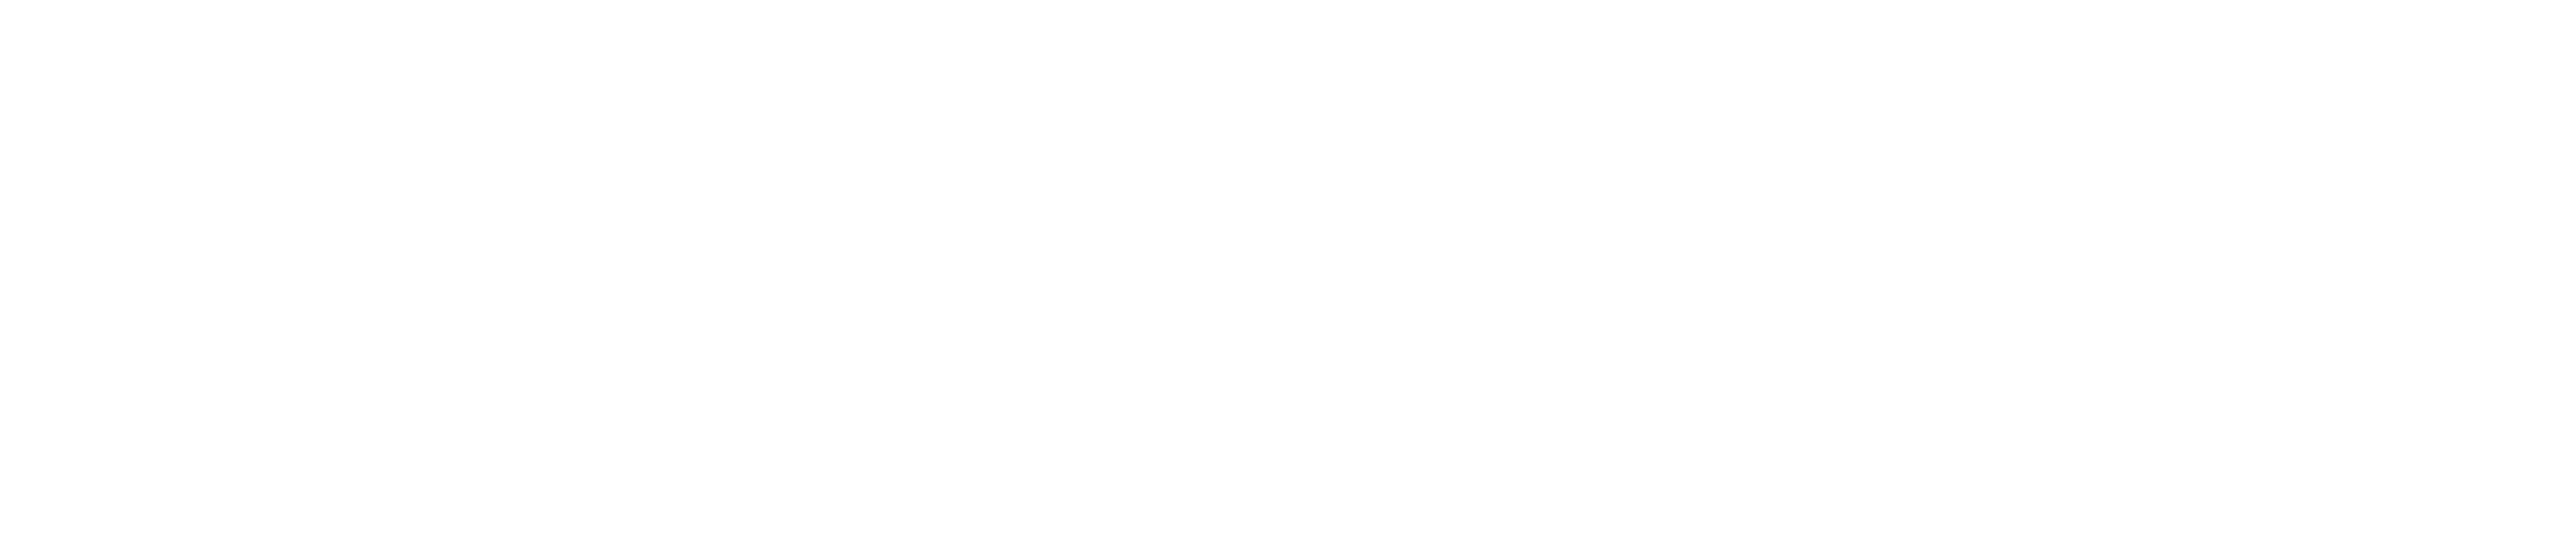 Geocodify logo